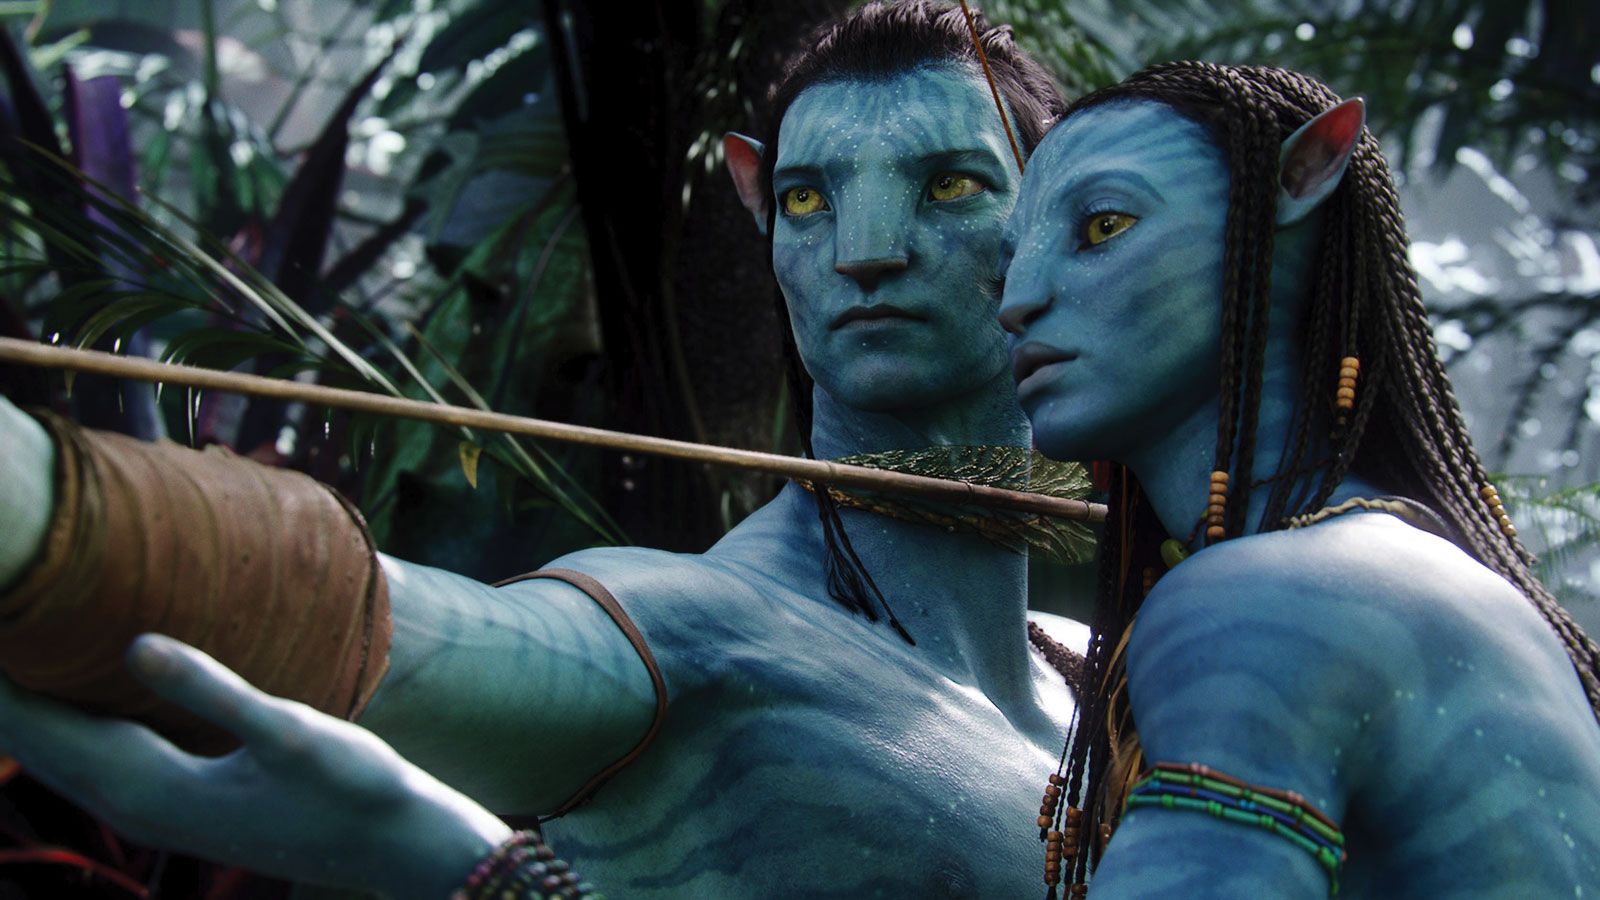 Zoe Saldana. Biography, Movies, Avatar, & Facts